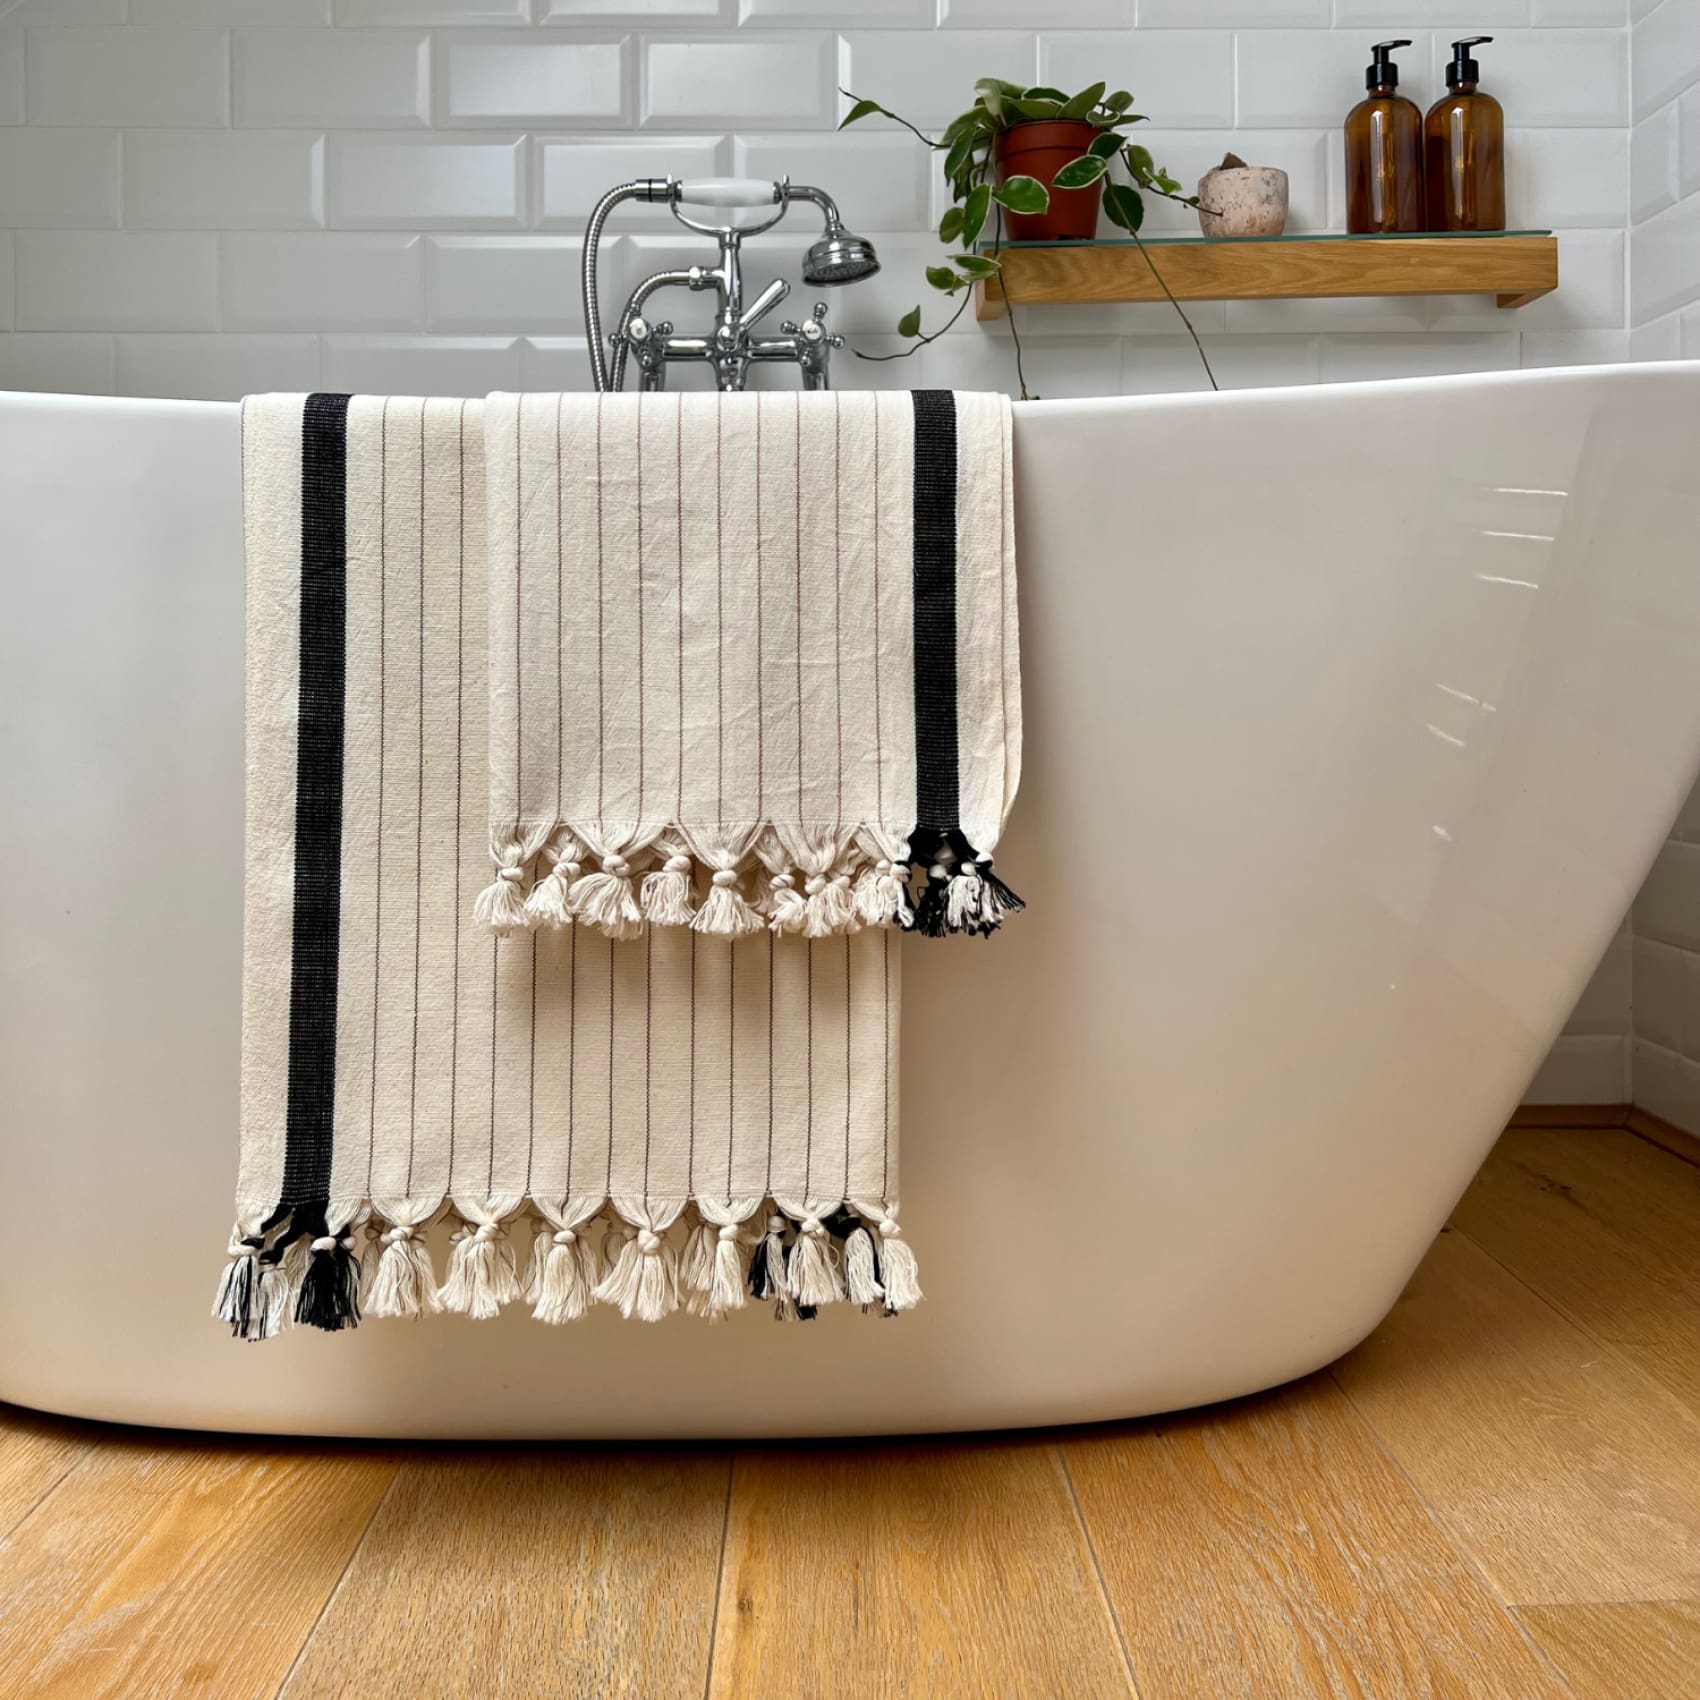 capella-cotton-peshtemal-black-salt-bathroom-blanket-cream-dining-luks-linen-plumbing-fixture-tap-840.jpg